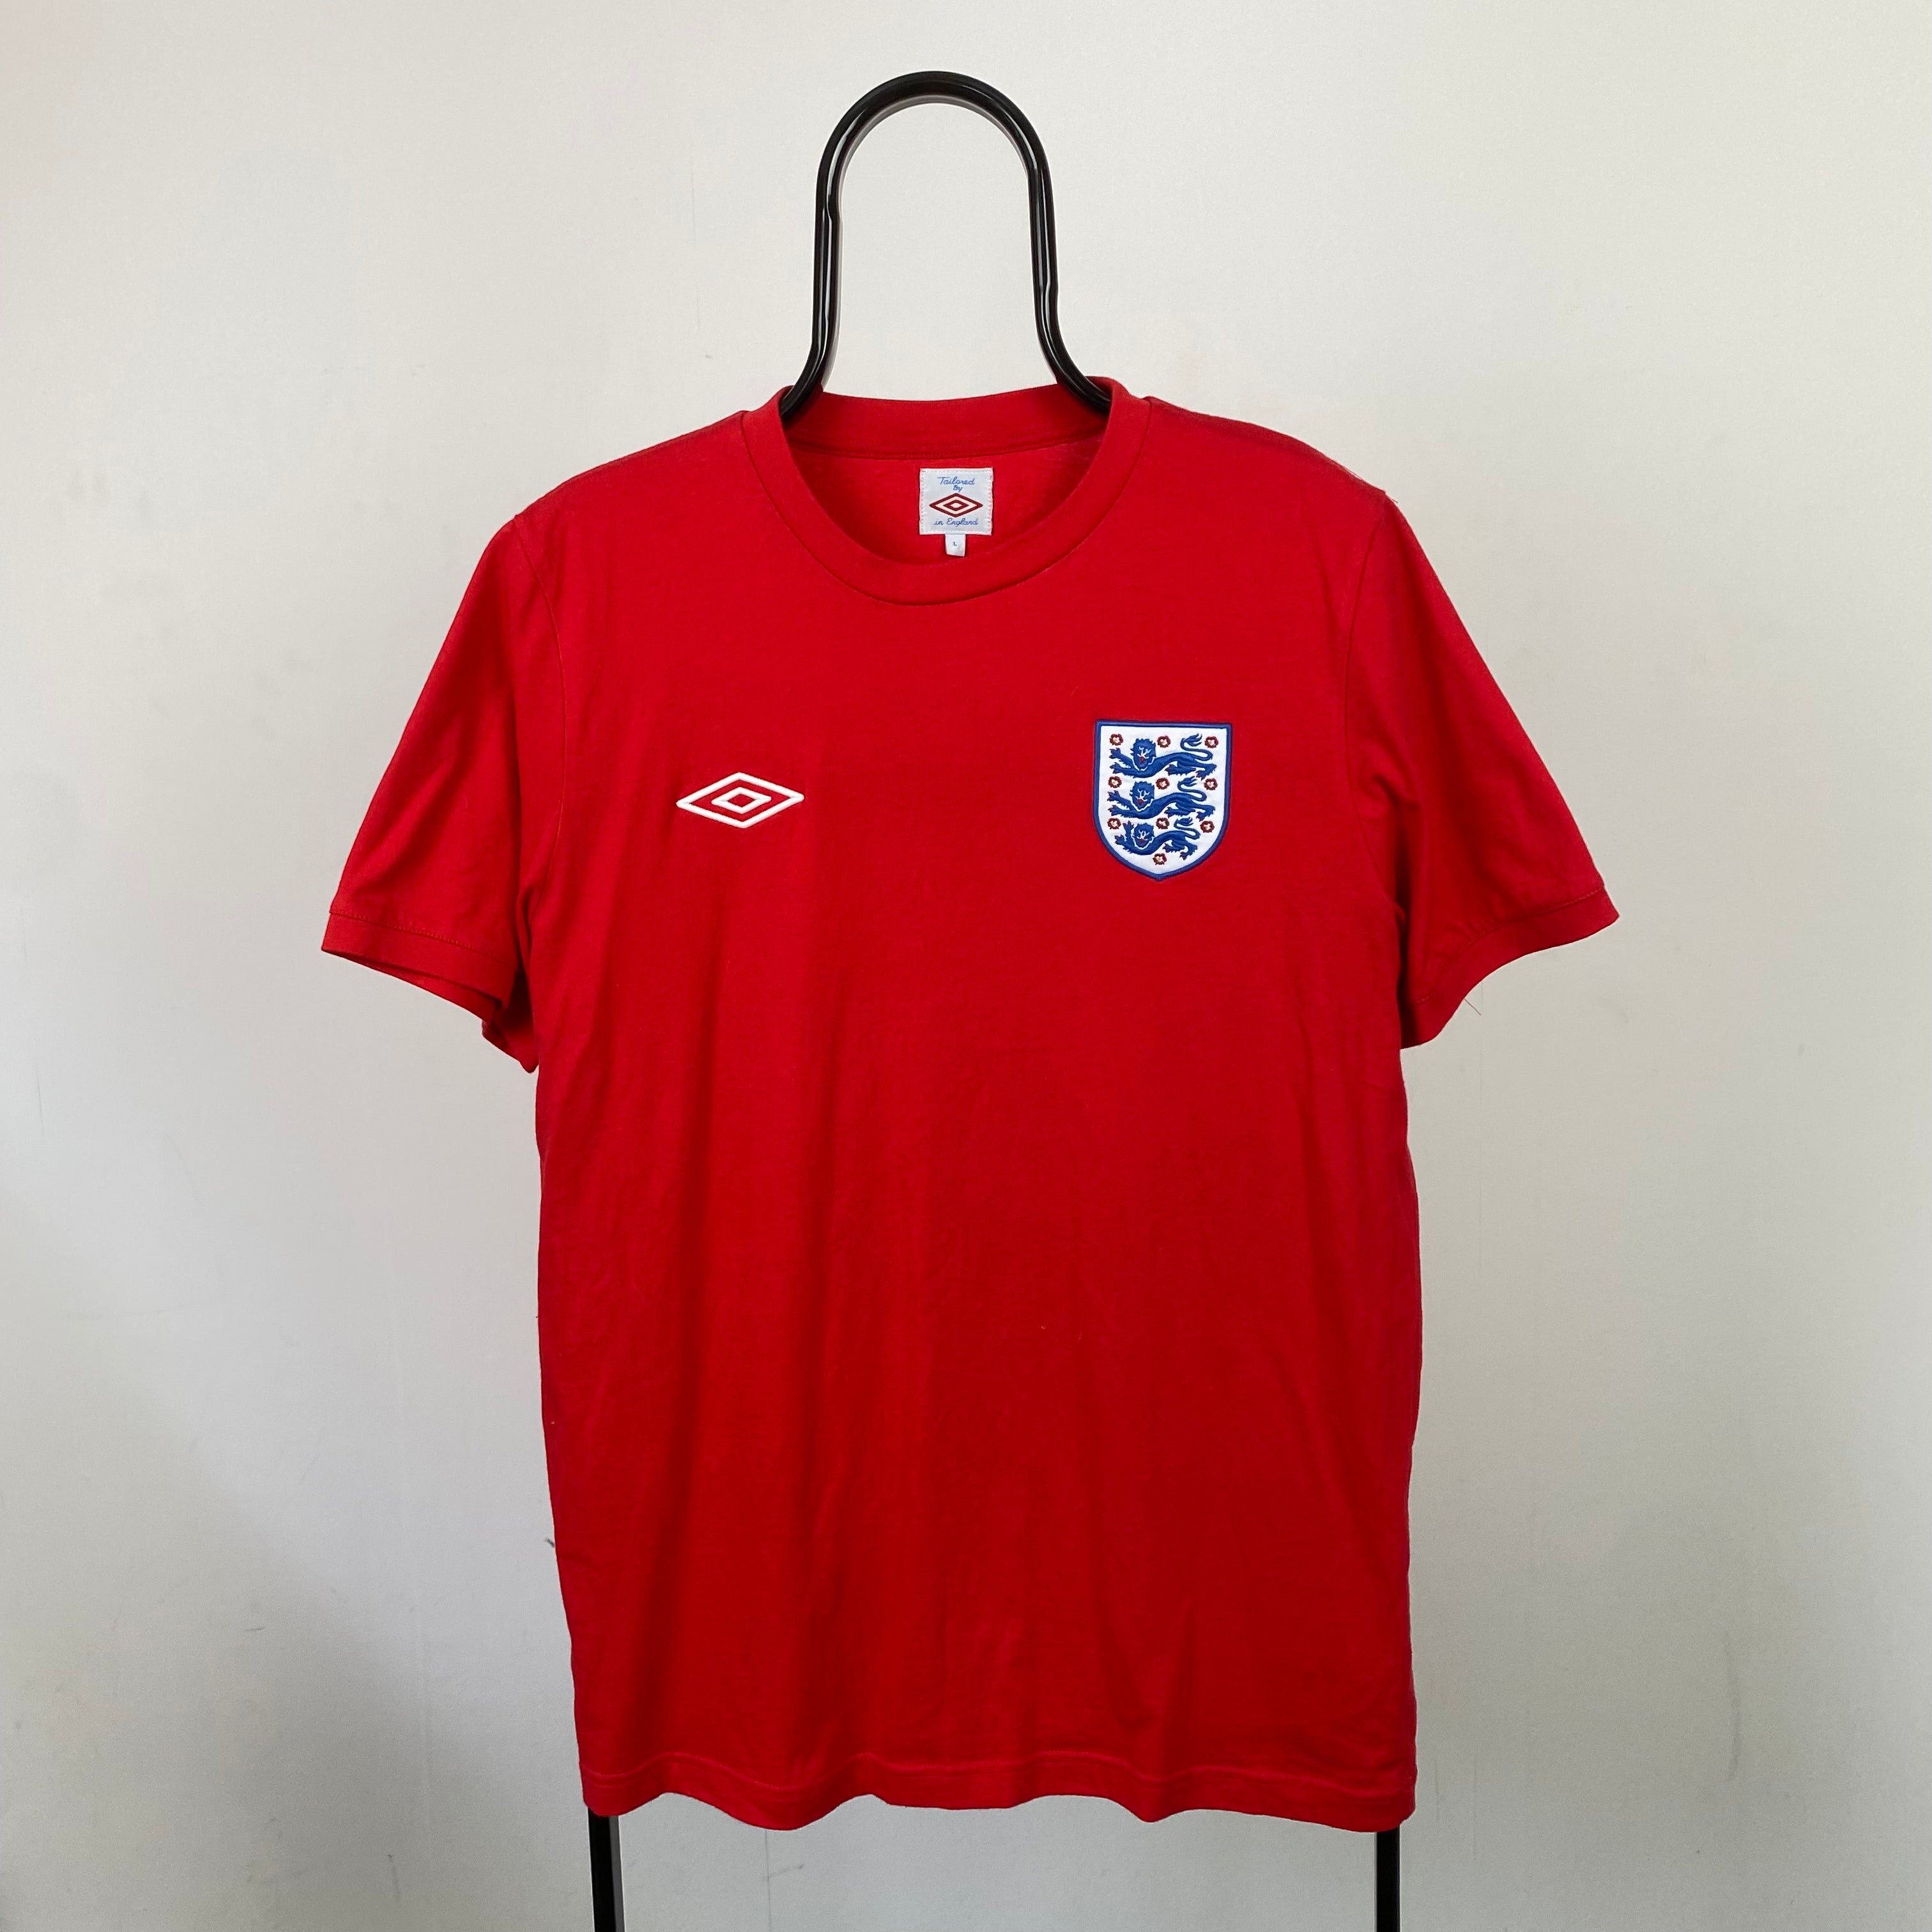 Retro Umbro England Football Shirt T-Shirt Red Large